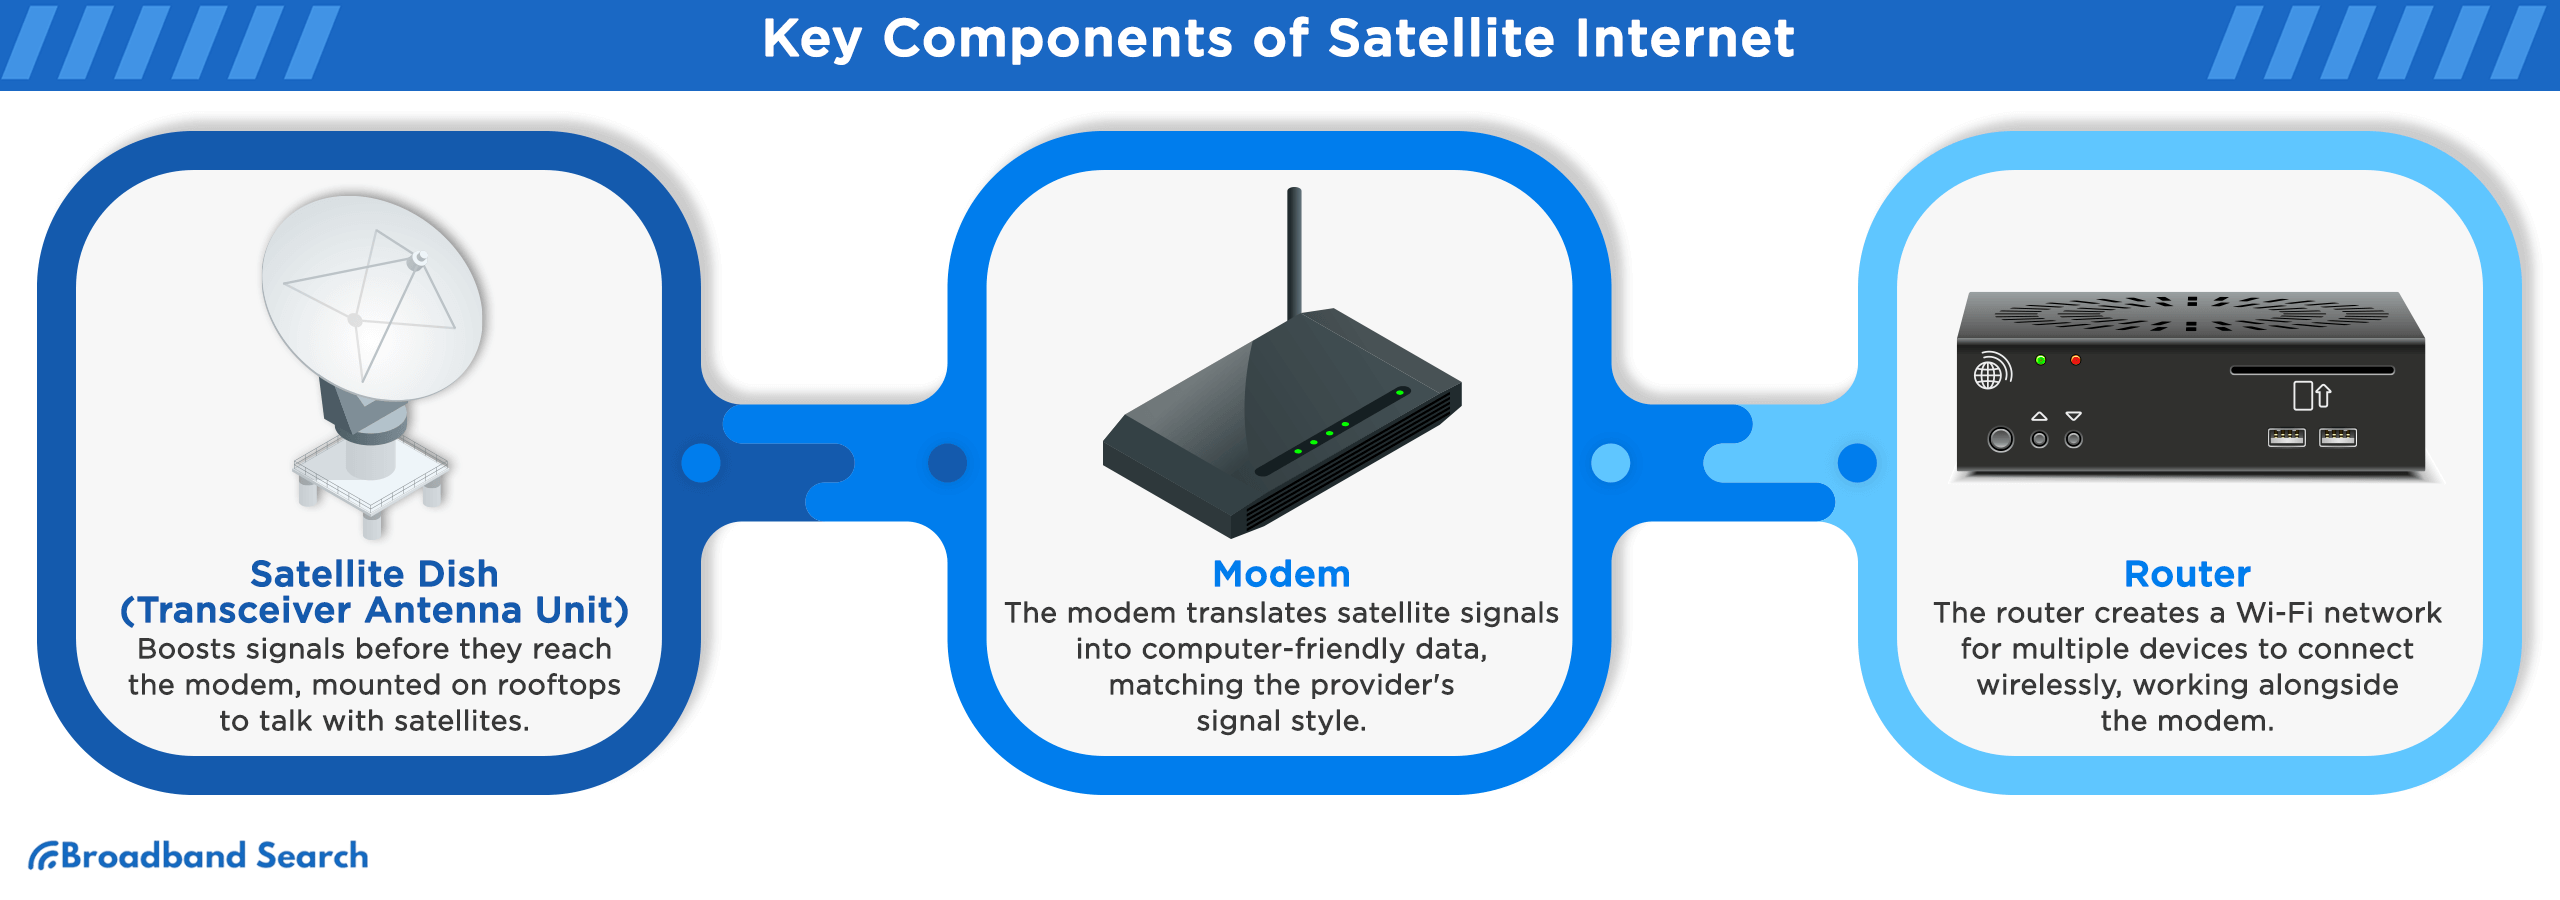 Key components of Satellite Internet